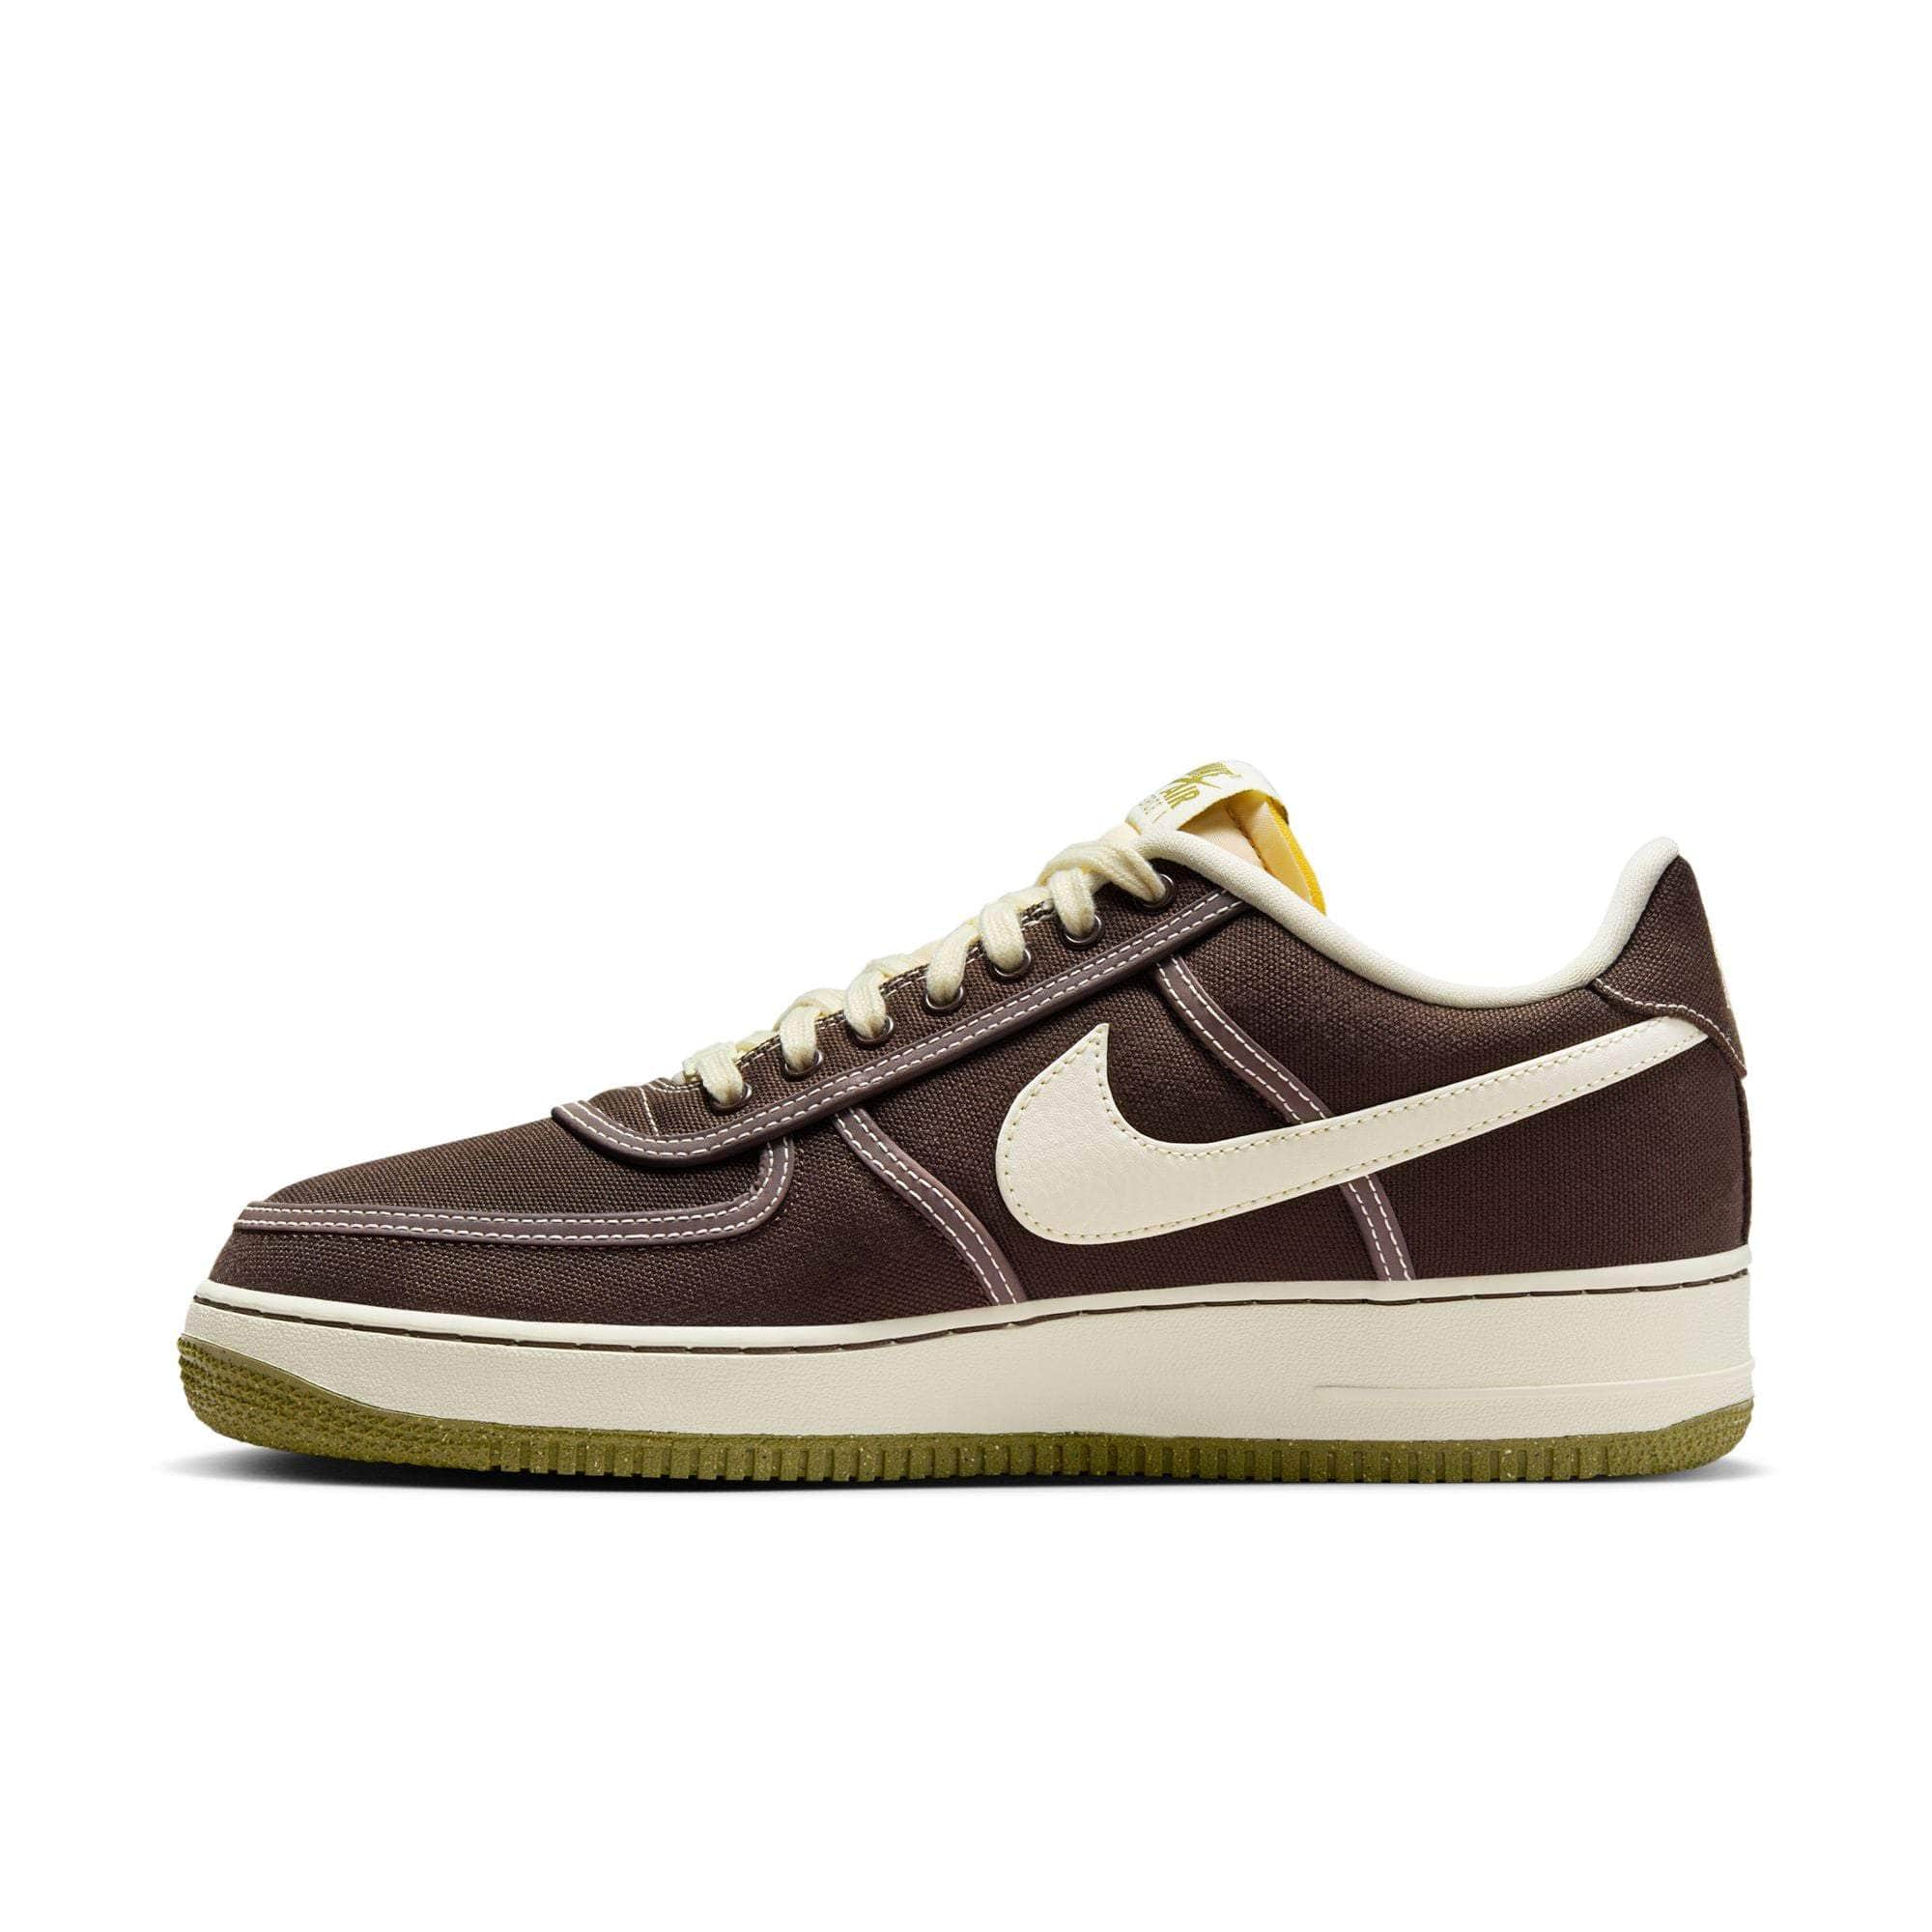 Nike FOOTWEAR Nike Air Force 1 '07 Premium “Baroque Brown” - Men's